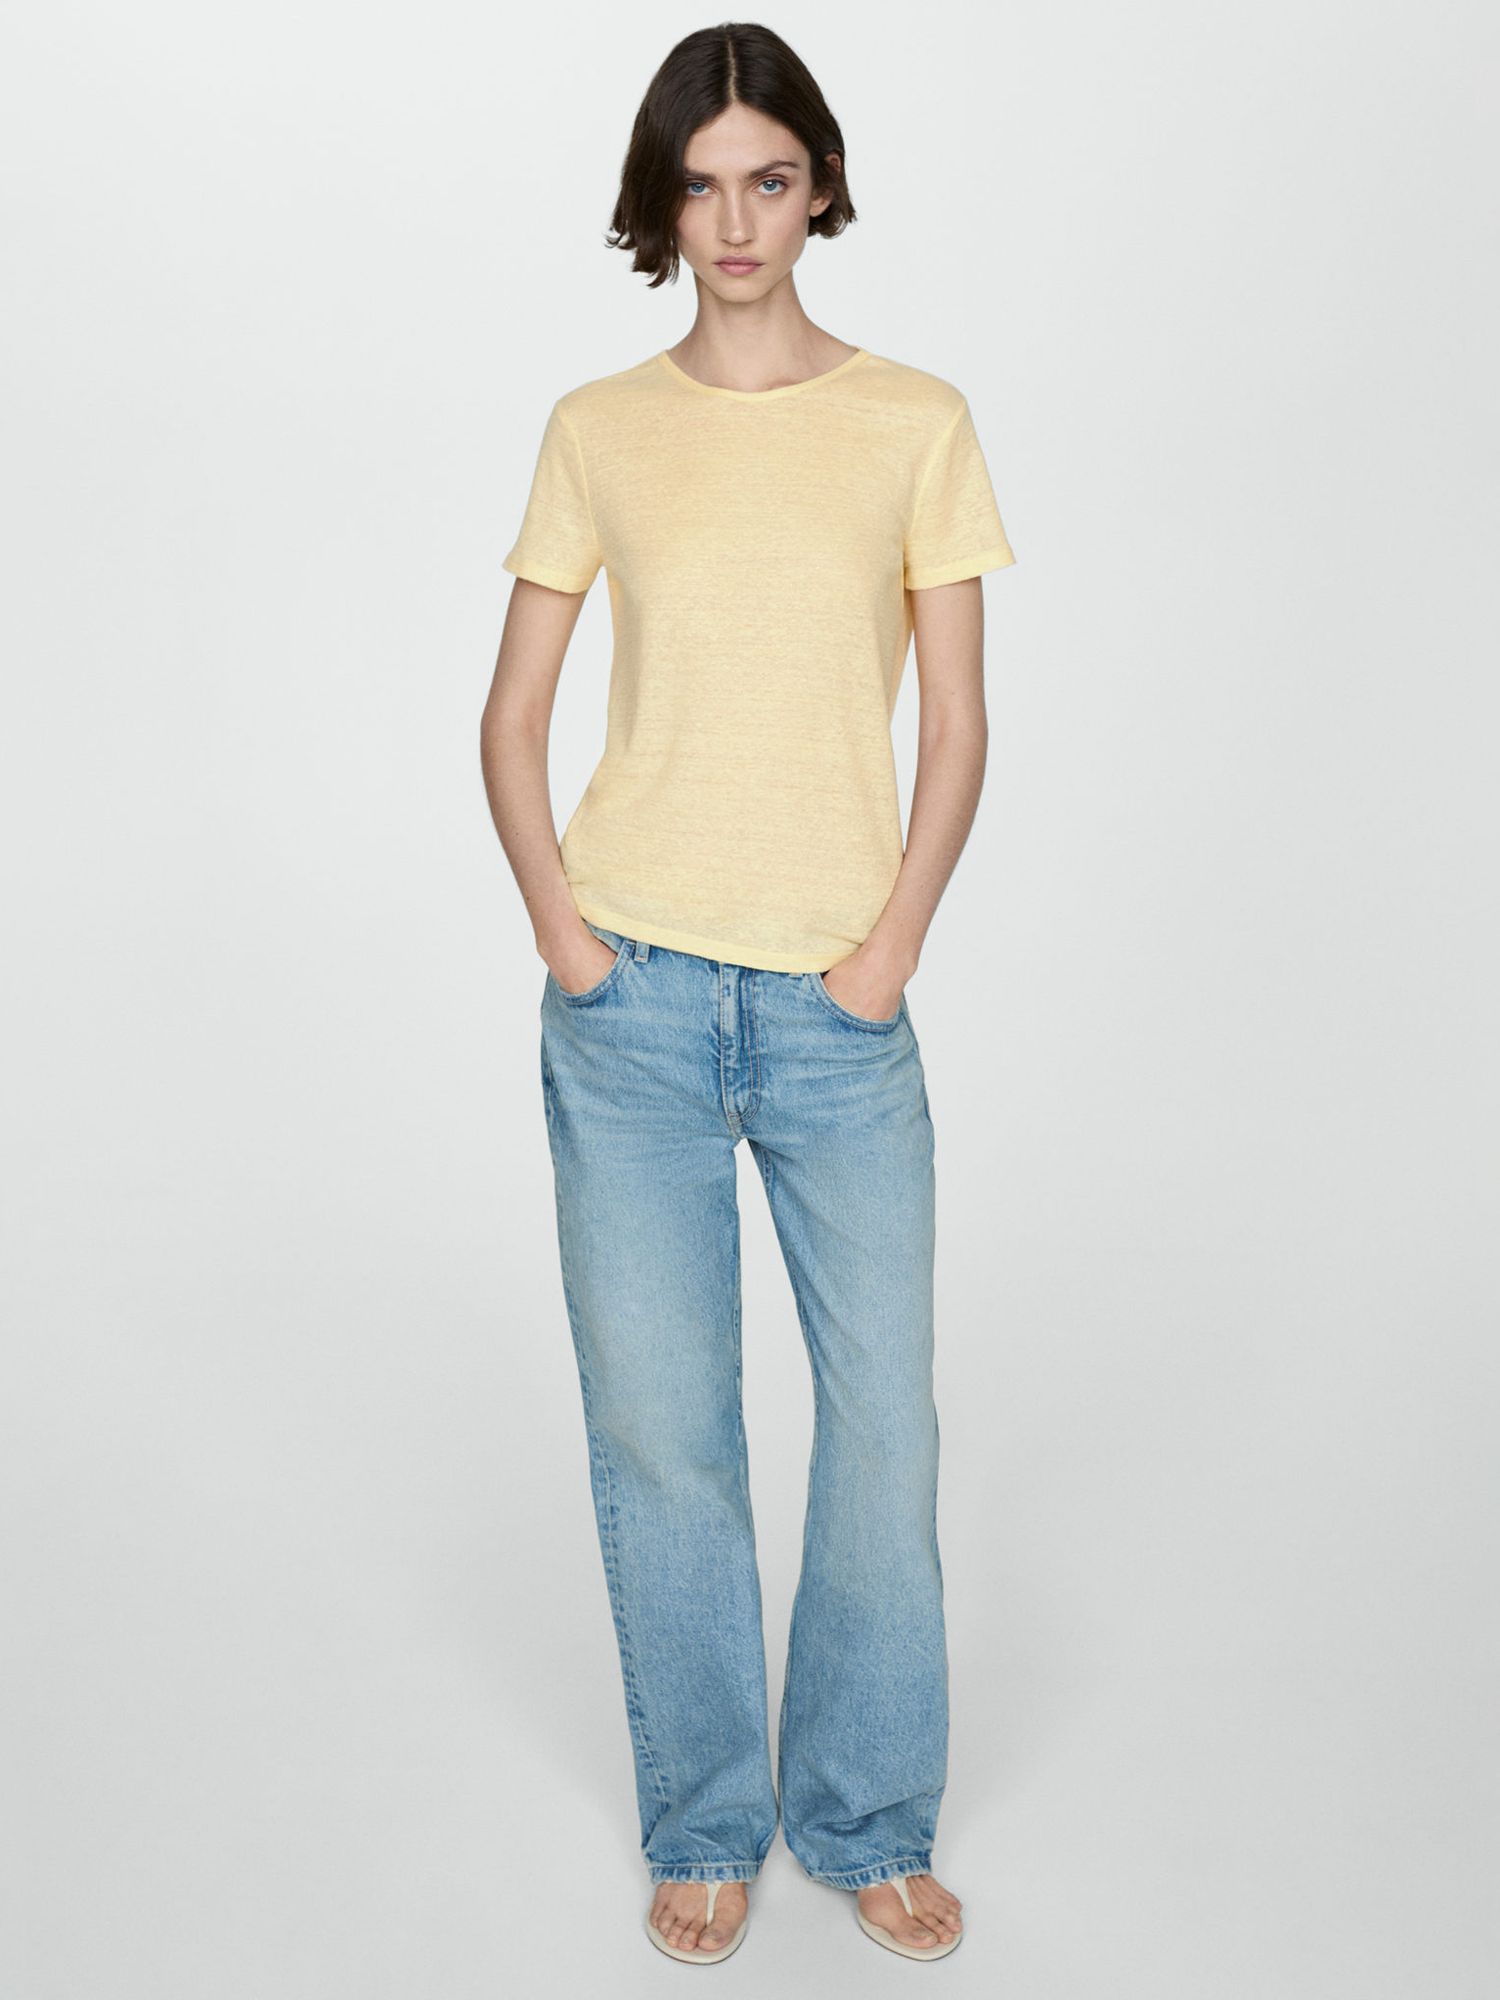 Mango Leno Linen T-Shirt, Yellow, XS